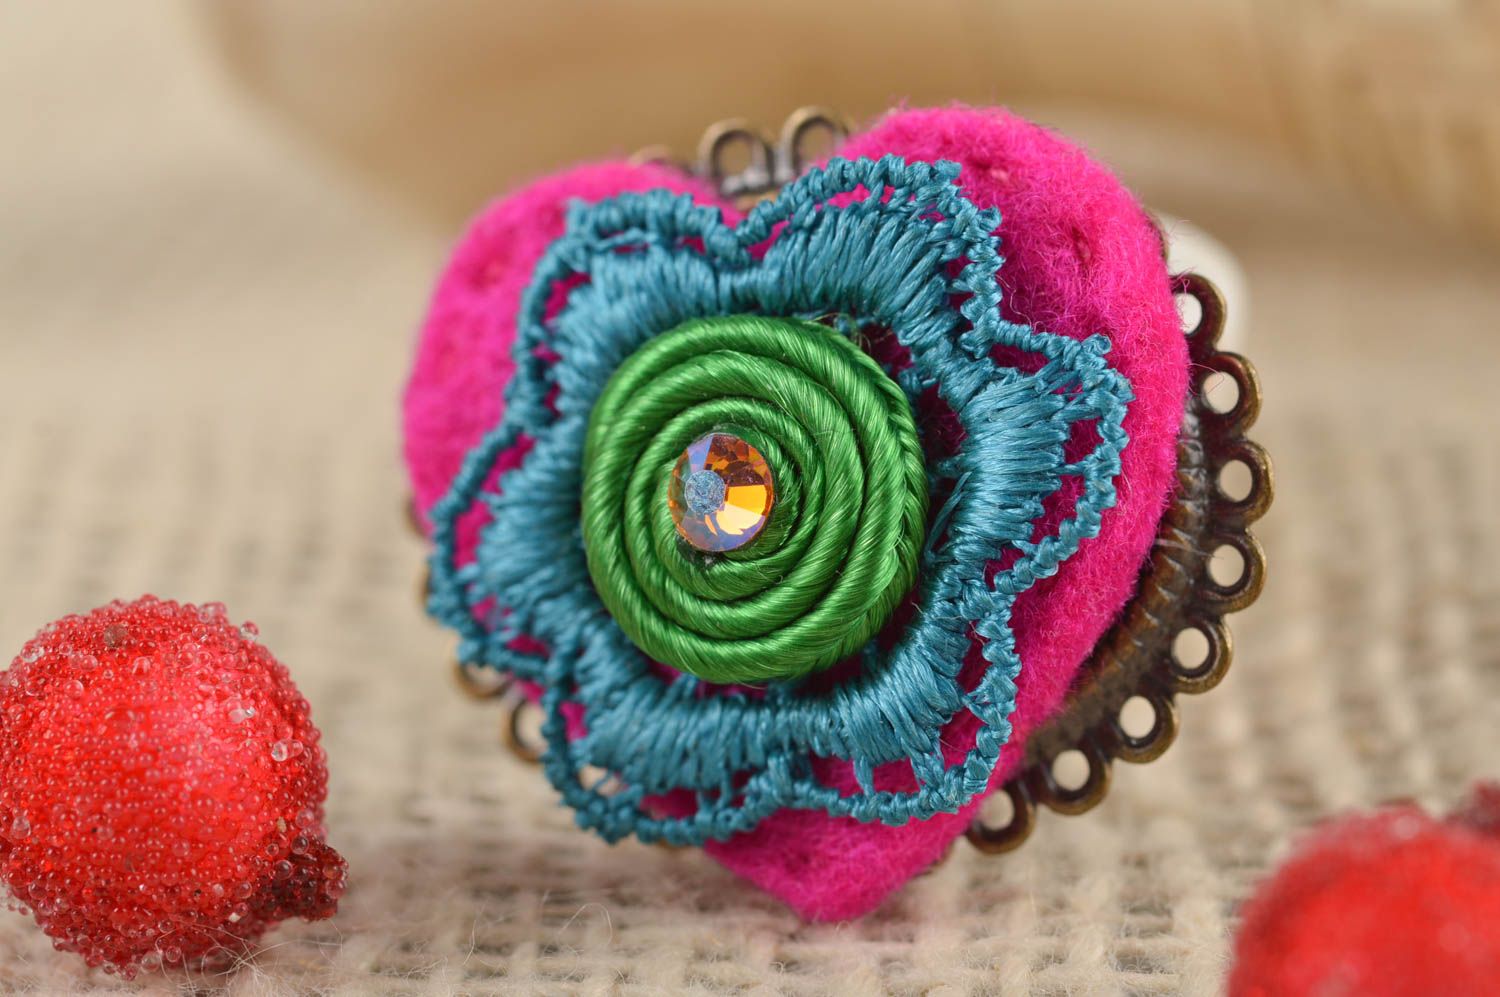 Beautiful handmade felt brooch artisan jewelry designs accessories for girls photo 1